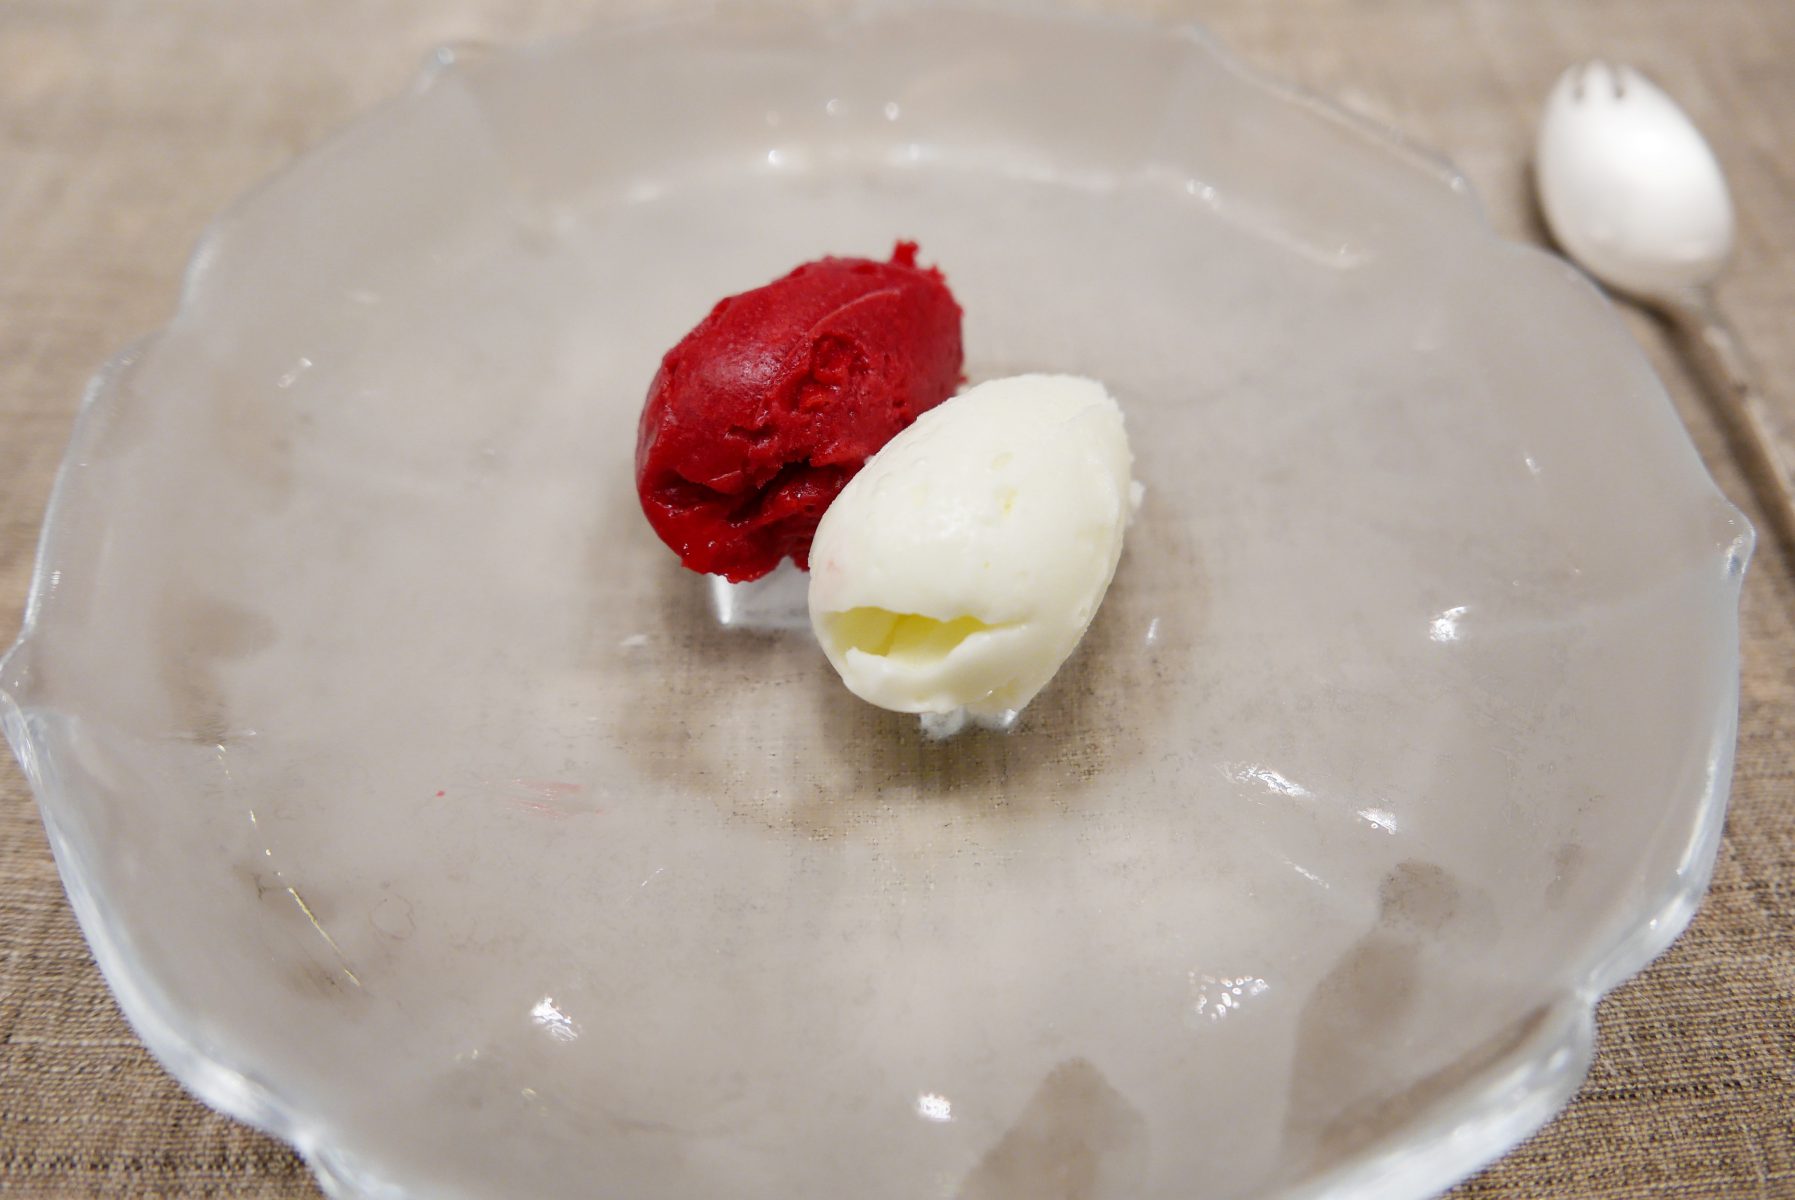 Raspberry and yoghurt sorbet